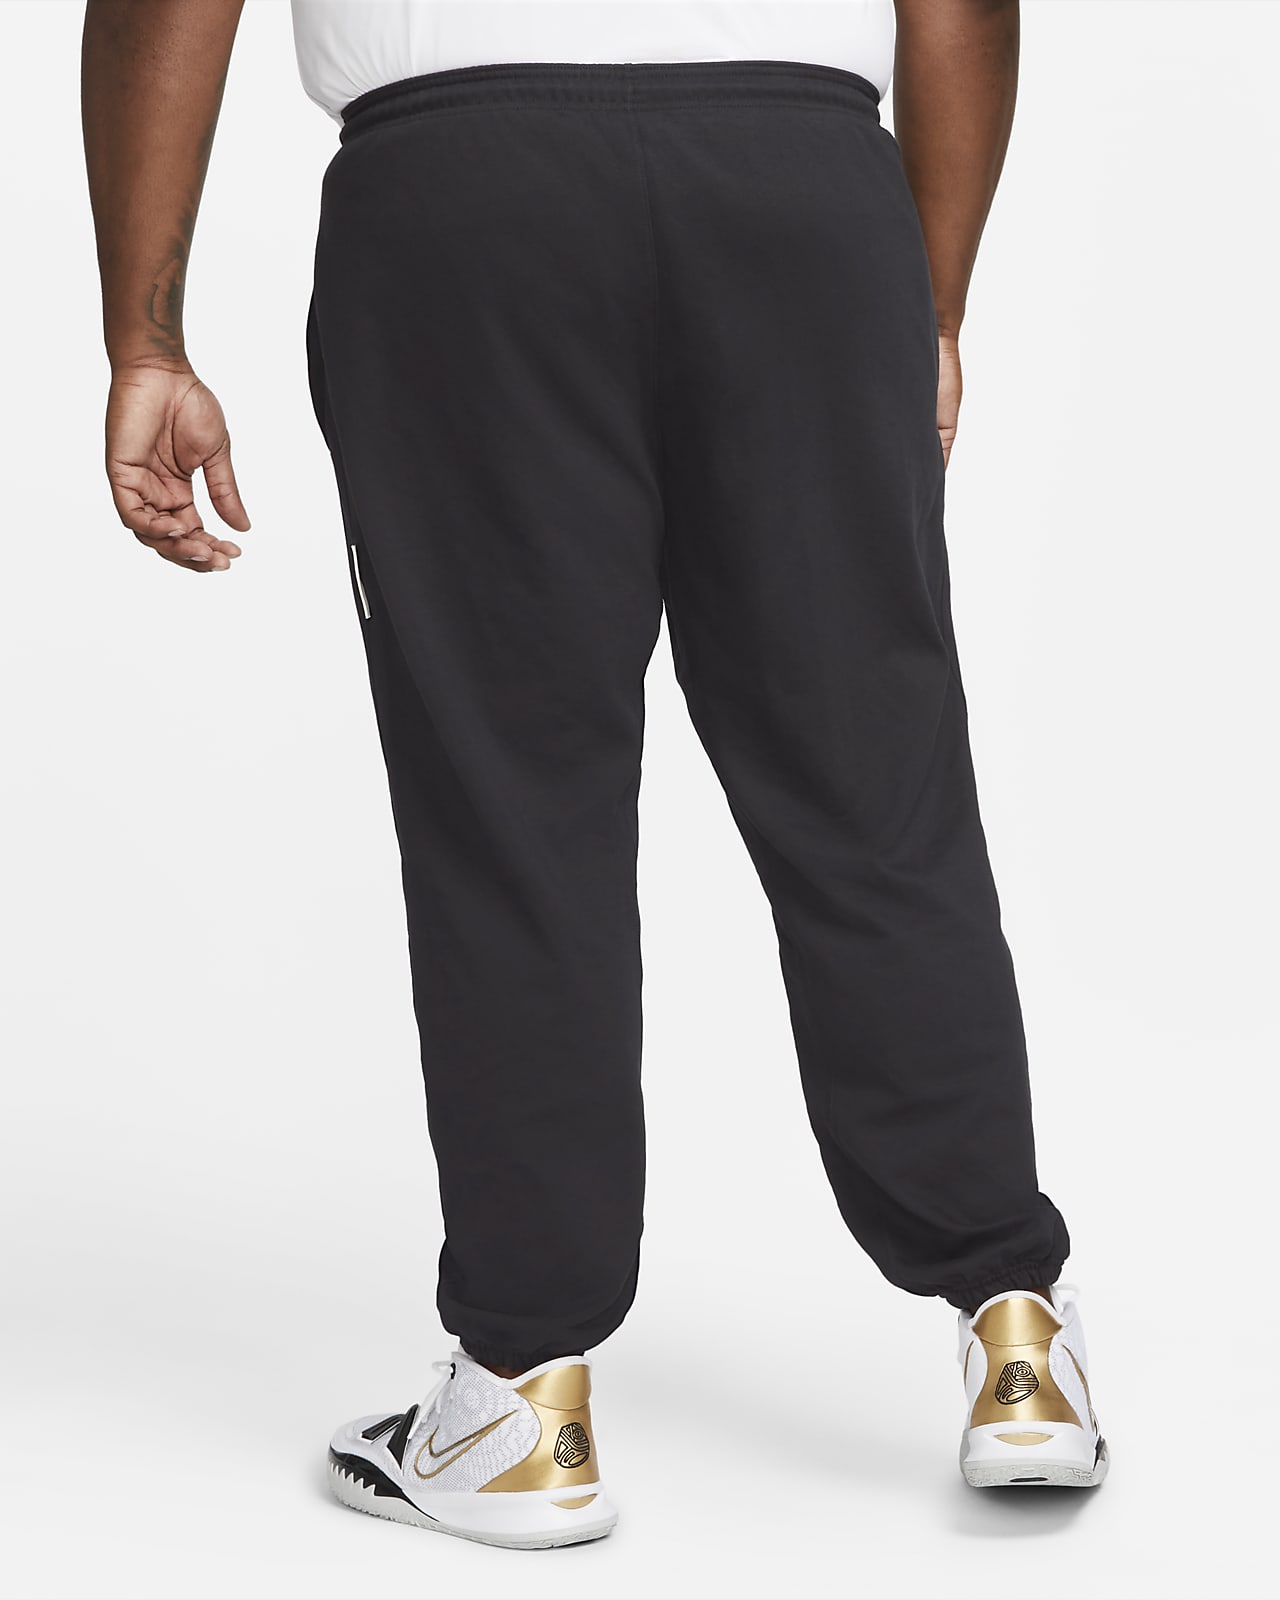 Nike Basketball Fly Standard Issue sweatpants in black - BLACK